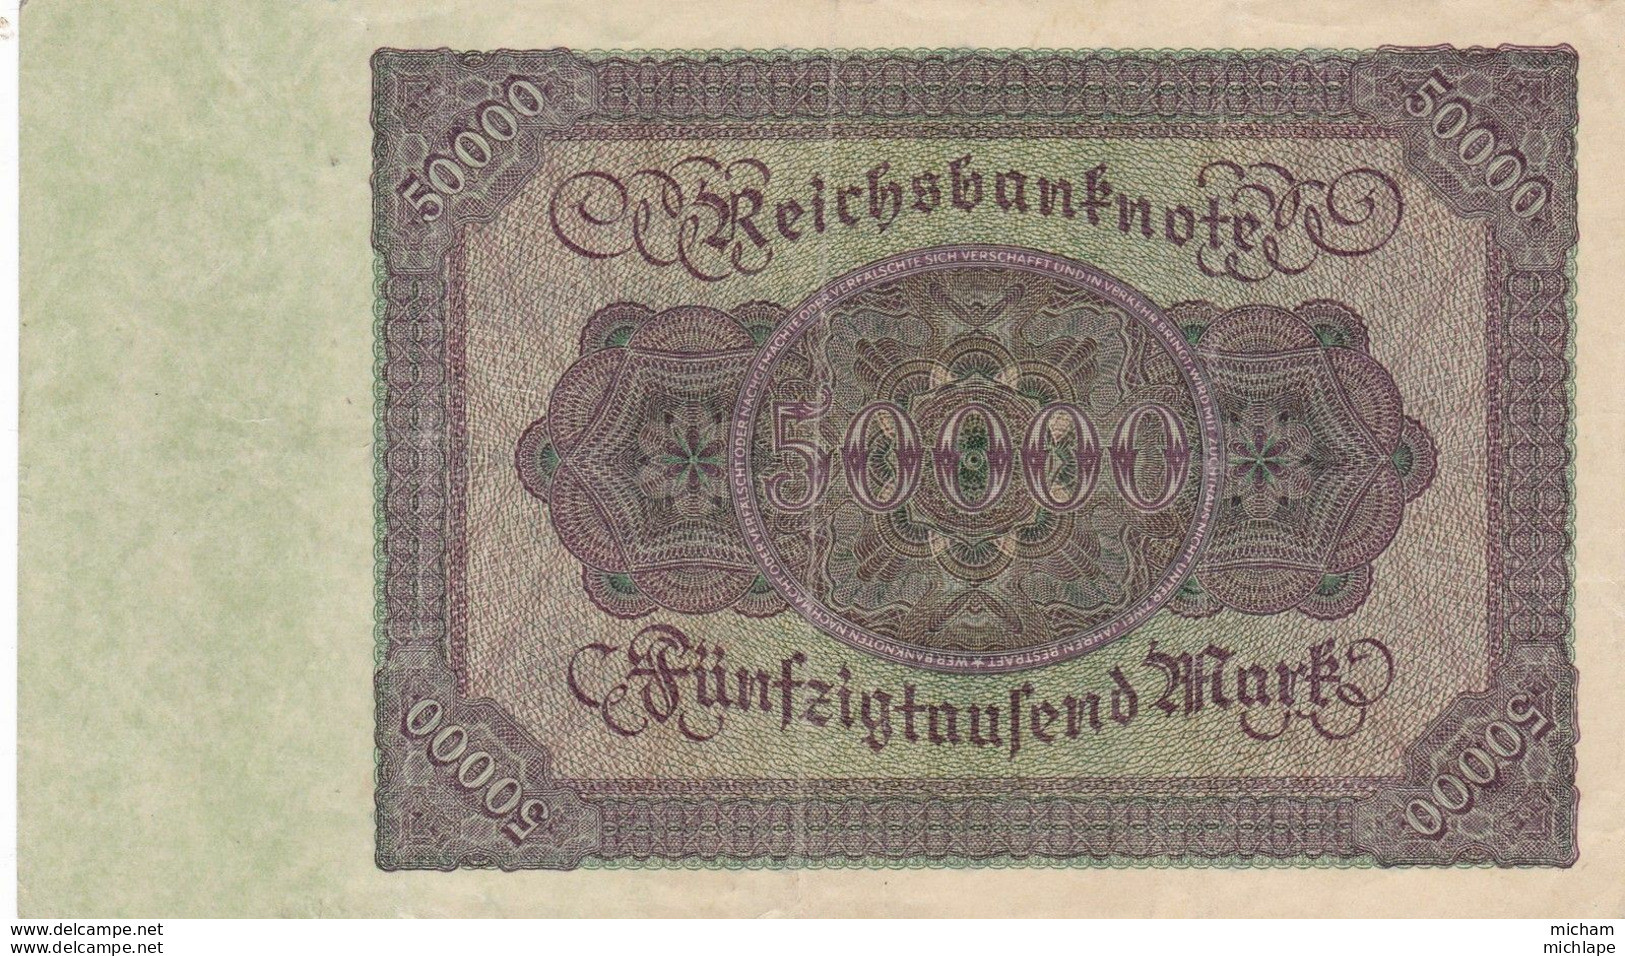 Allemagne   50000 Mark   1922  Ce Billet  A Circulé - Mais  Tres  Propre - 50000 Mark